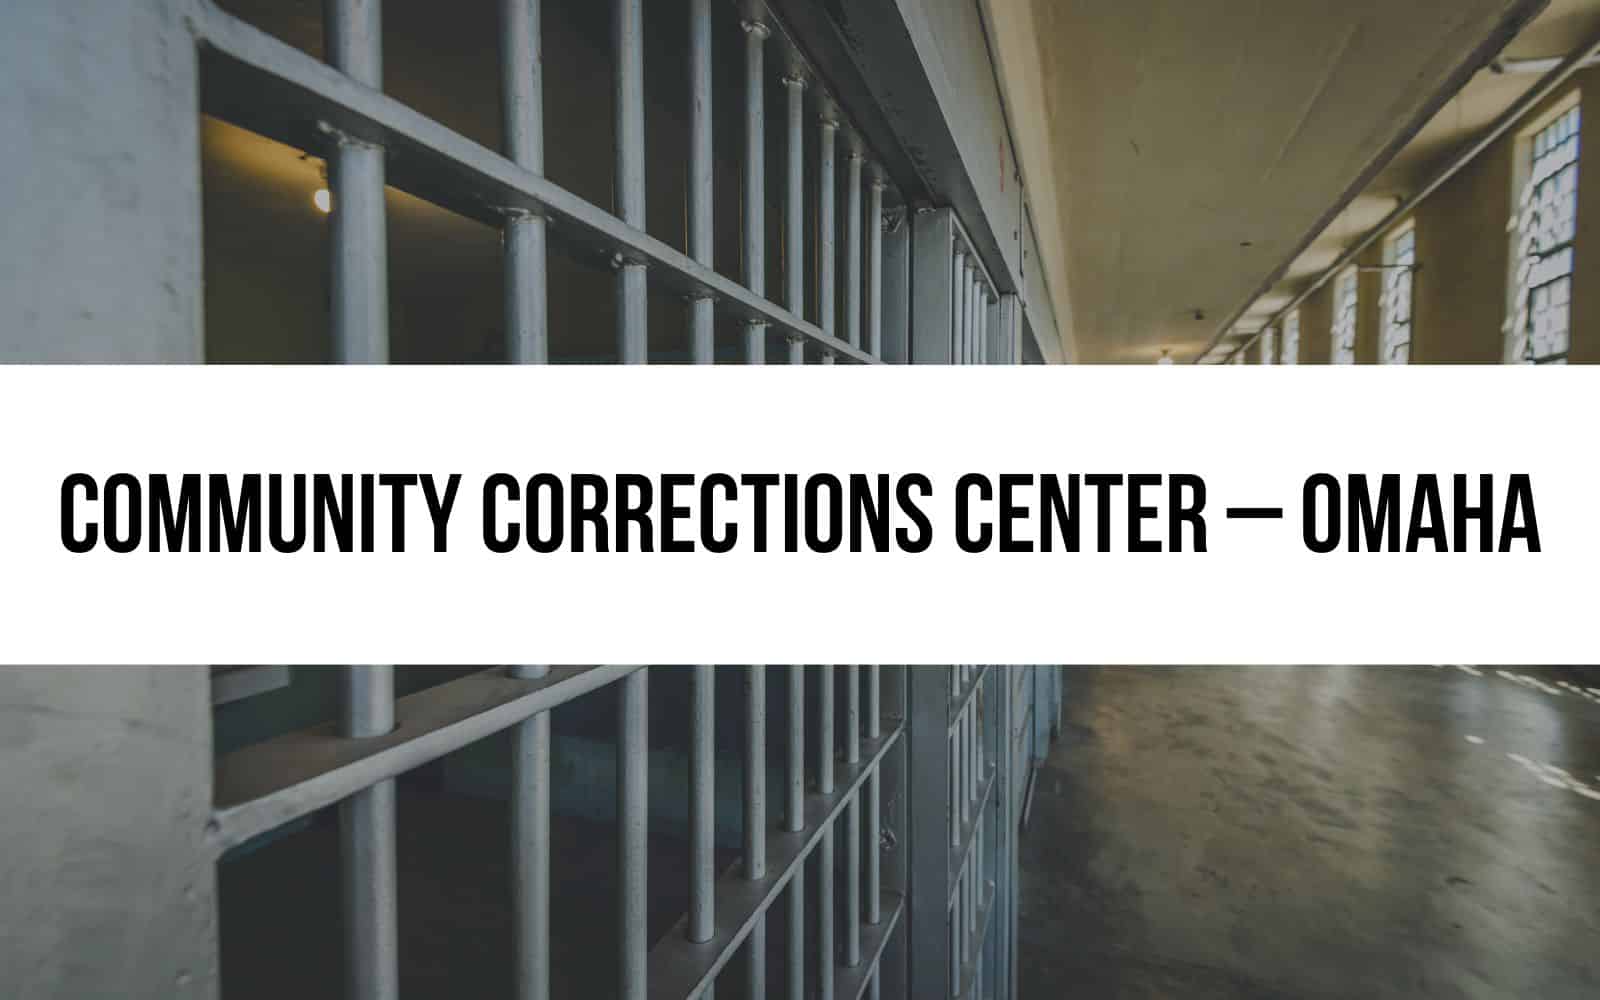 Community Corrections Center - Omaha